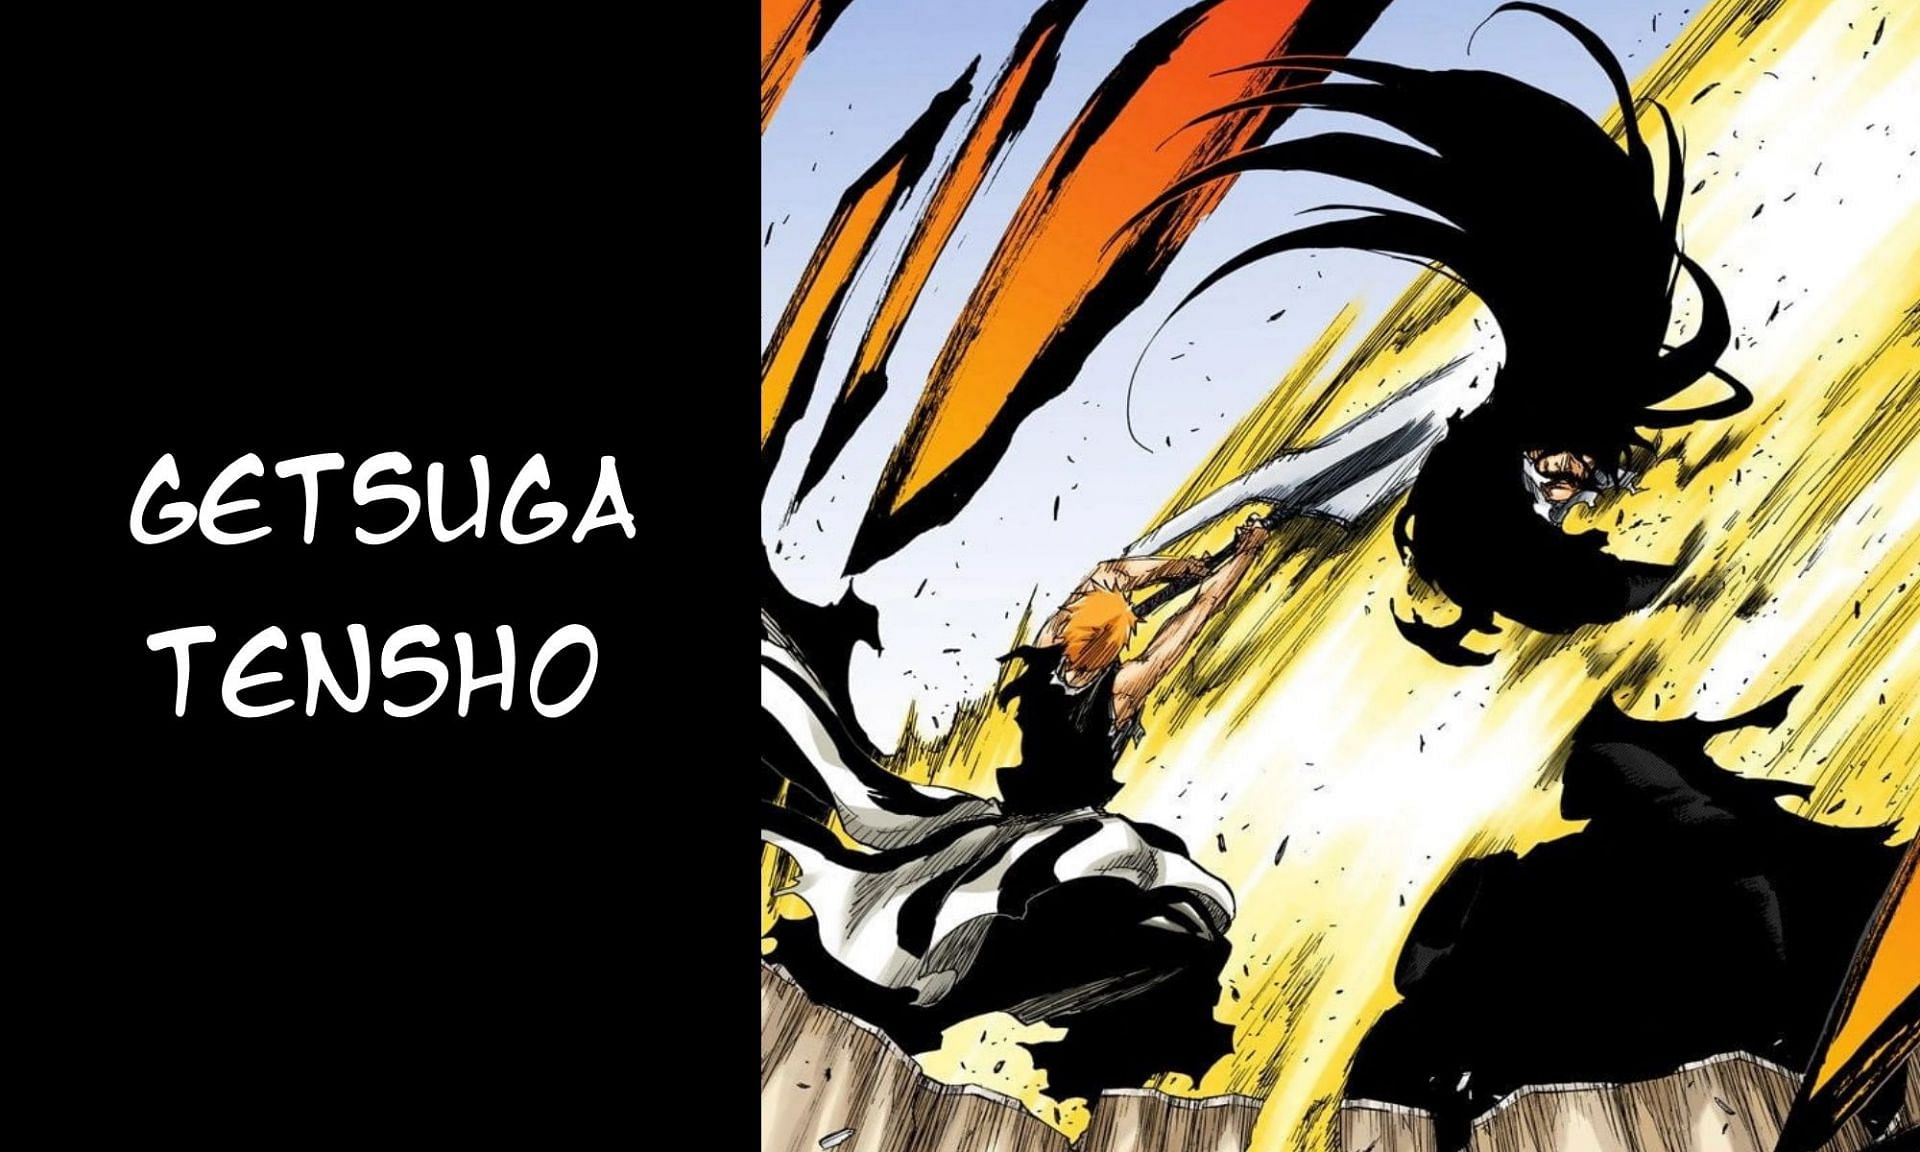 Ichigo kurosaki vs Yhwach Parte 2 #anime #bleach #ichigokurosaki #yhw